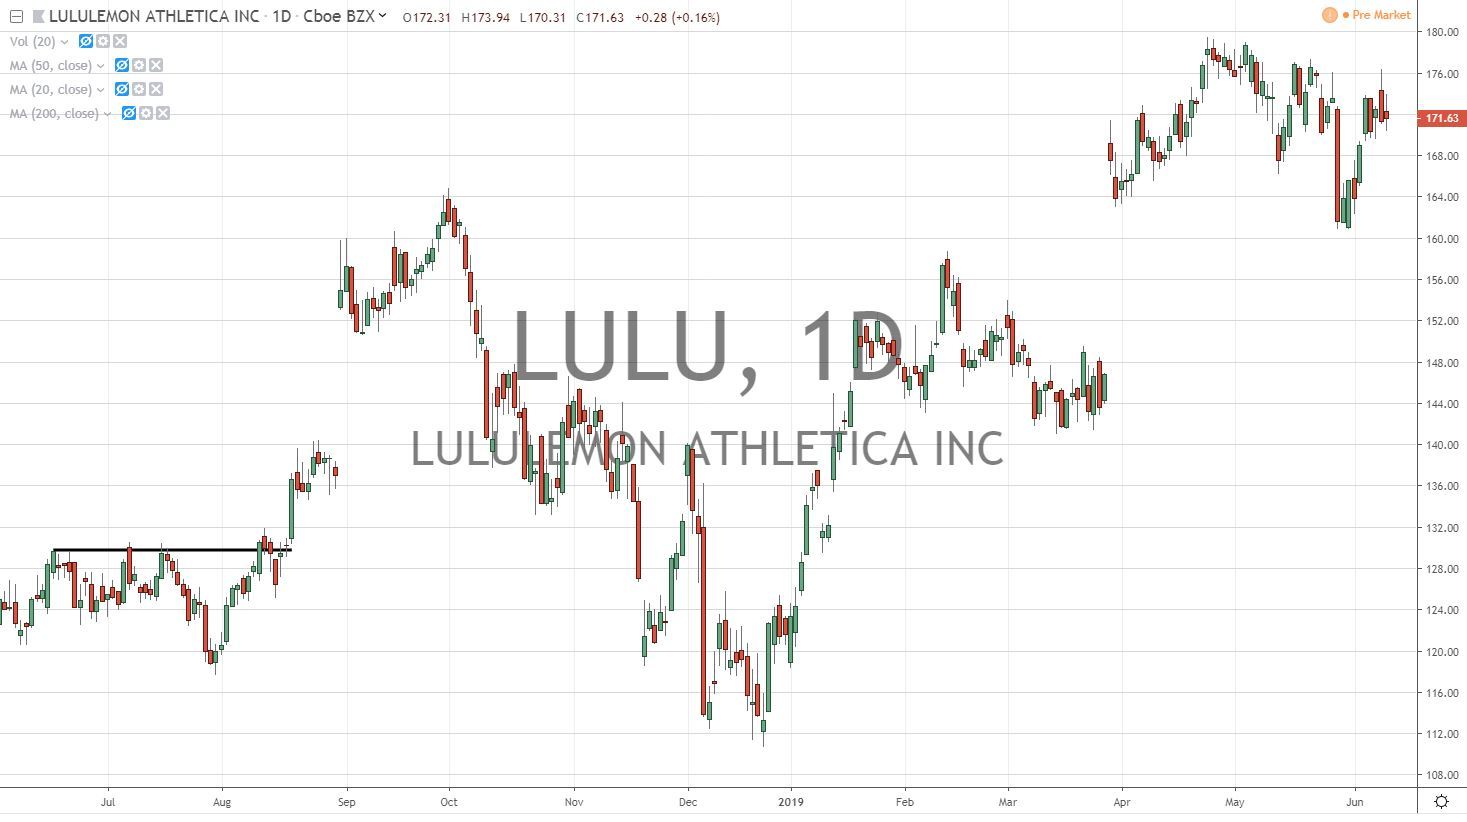 LULU Lululemon Stock Chart 6.12.19 Before Earnings Report